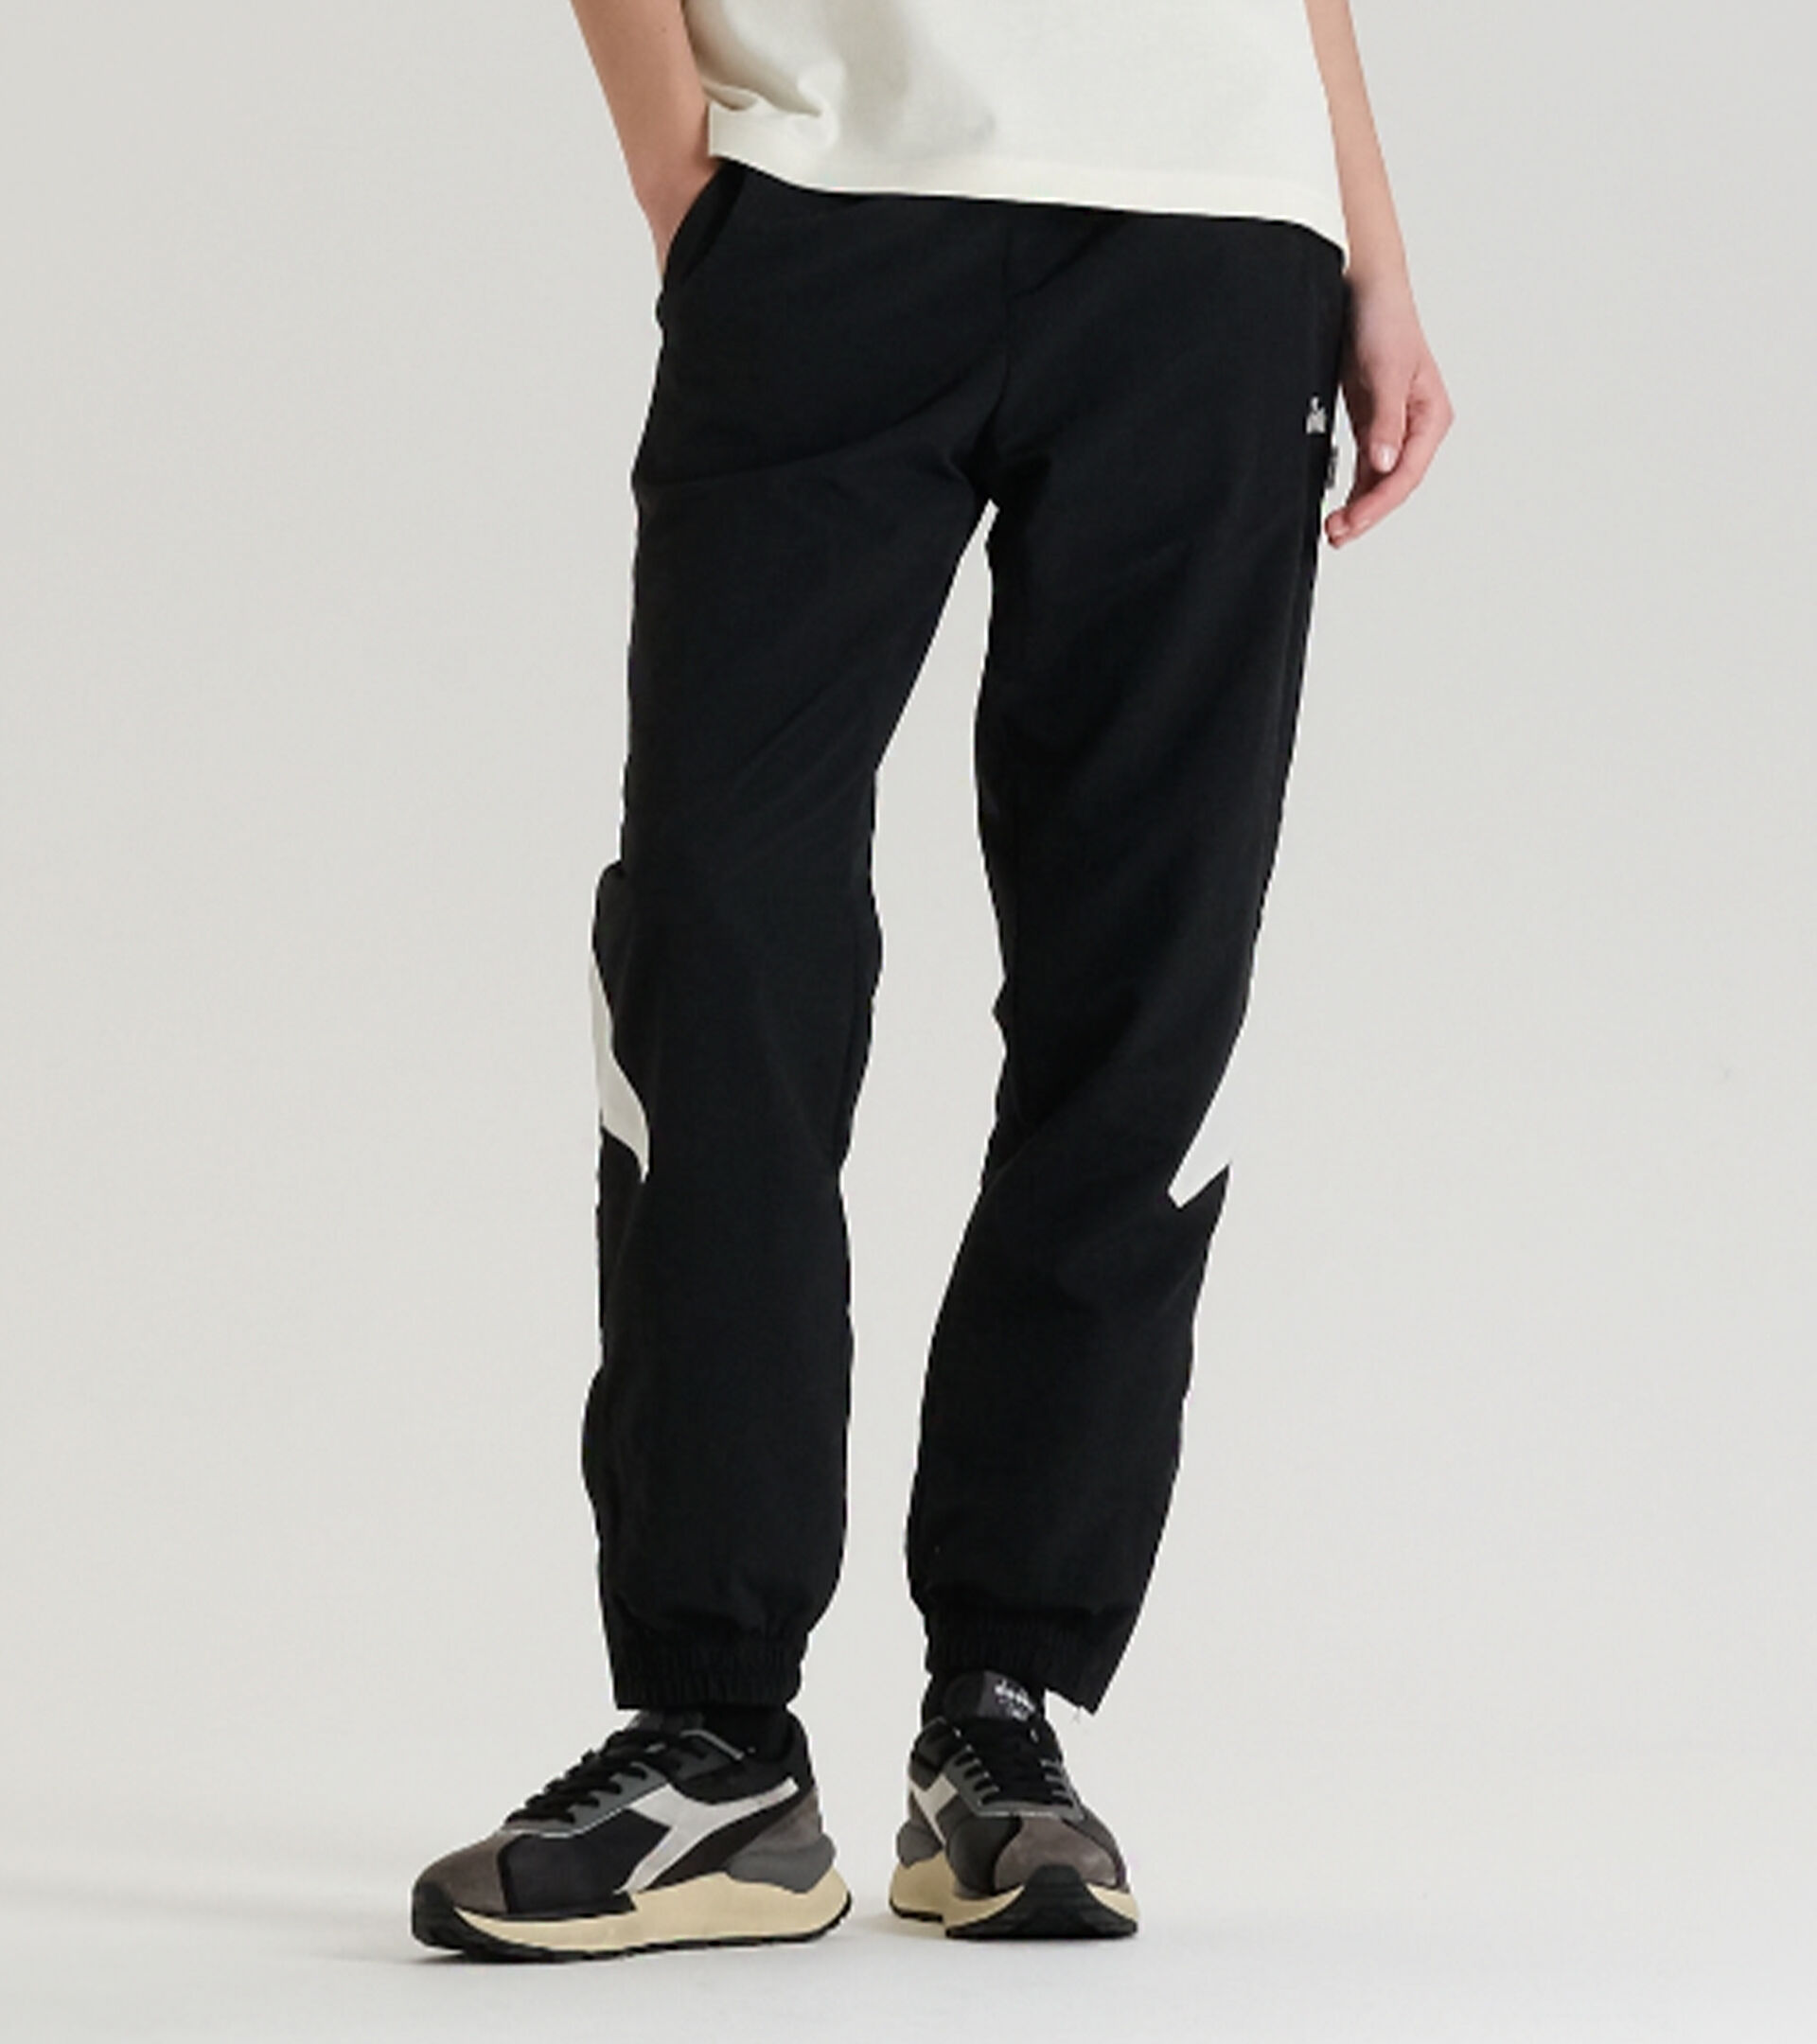 Pantalones deportivos - Made in Italy - Gender neutral TRACK PANTS LEGACY NEGRO - Diadora